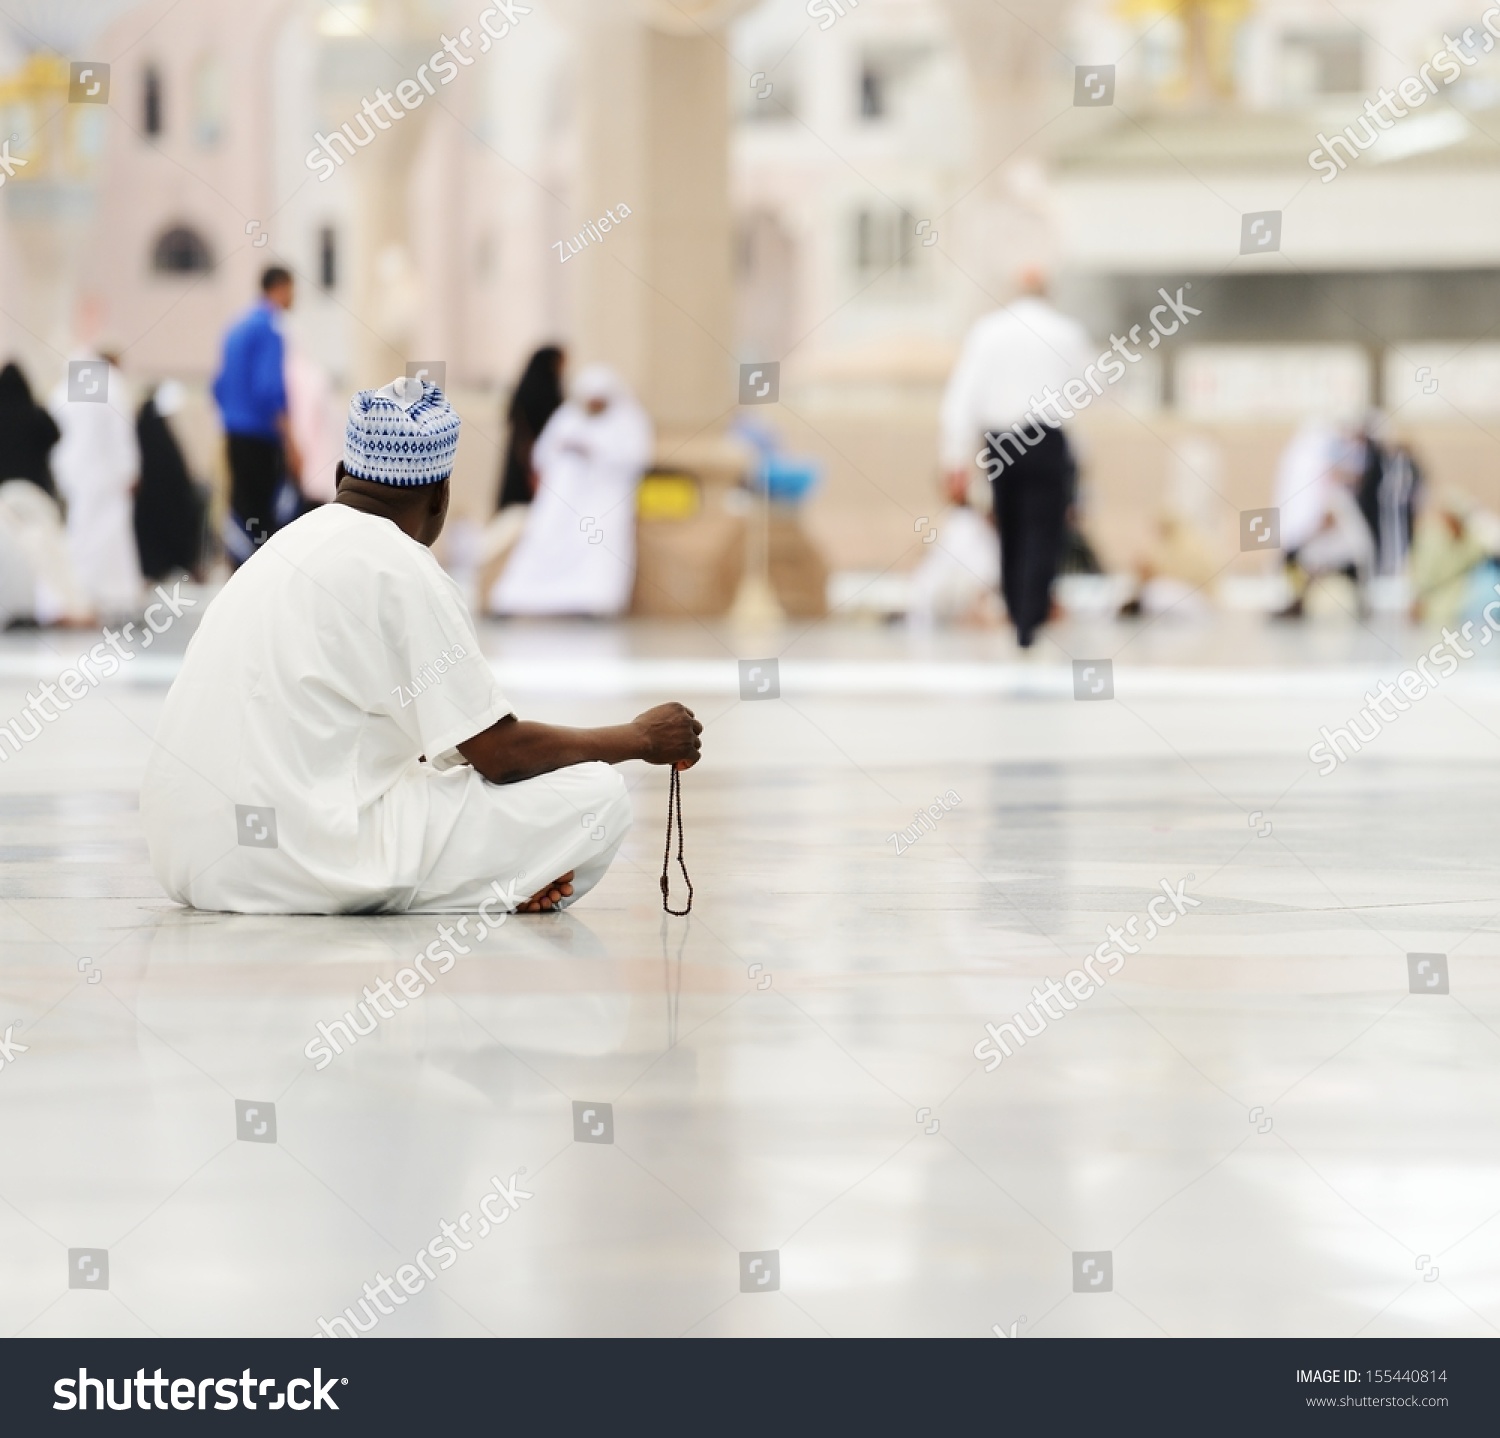 Muslim Man Sitting On Ground Praying Stock Photo 155440814 ...